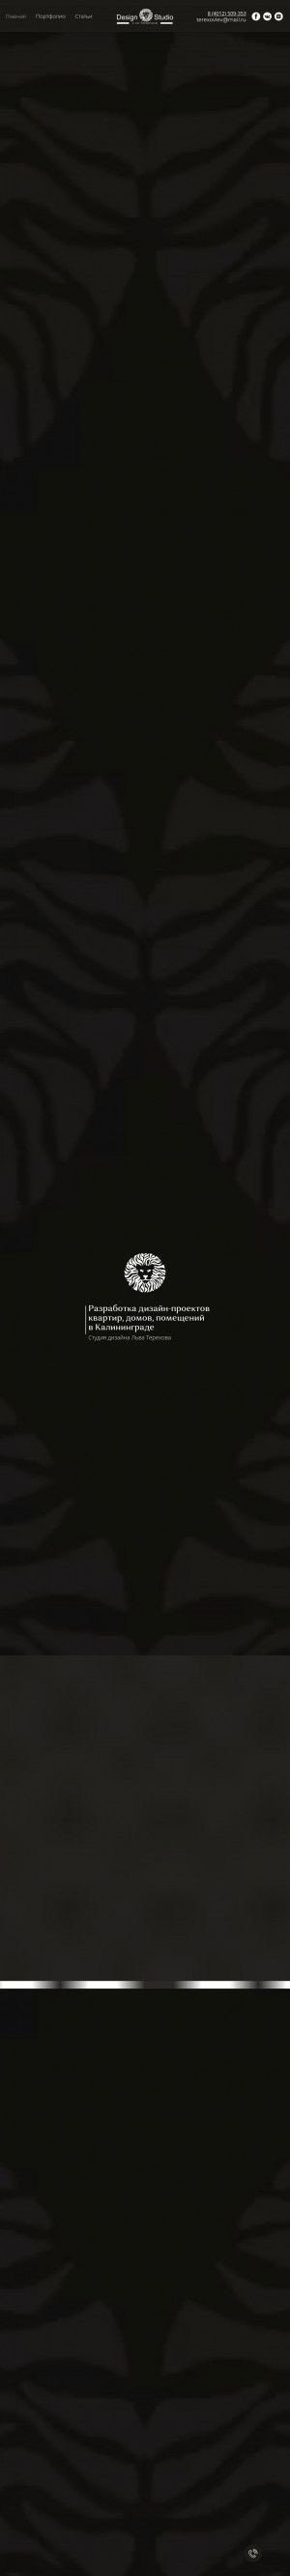 Предпросмотр для www.dizainlev.ru — Дизайн студия Льва Терехова